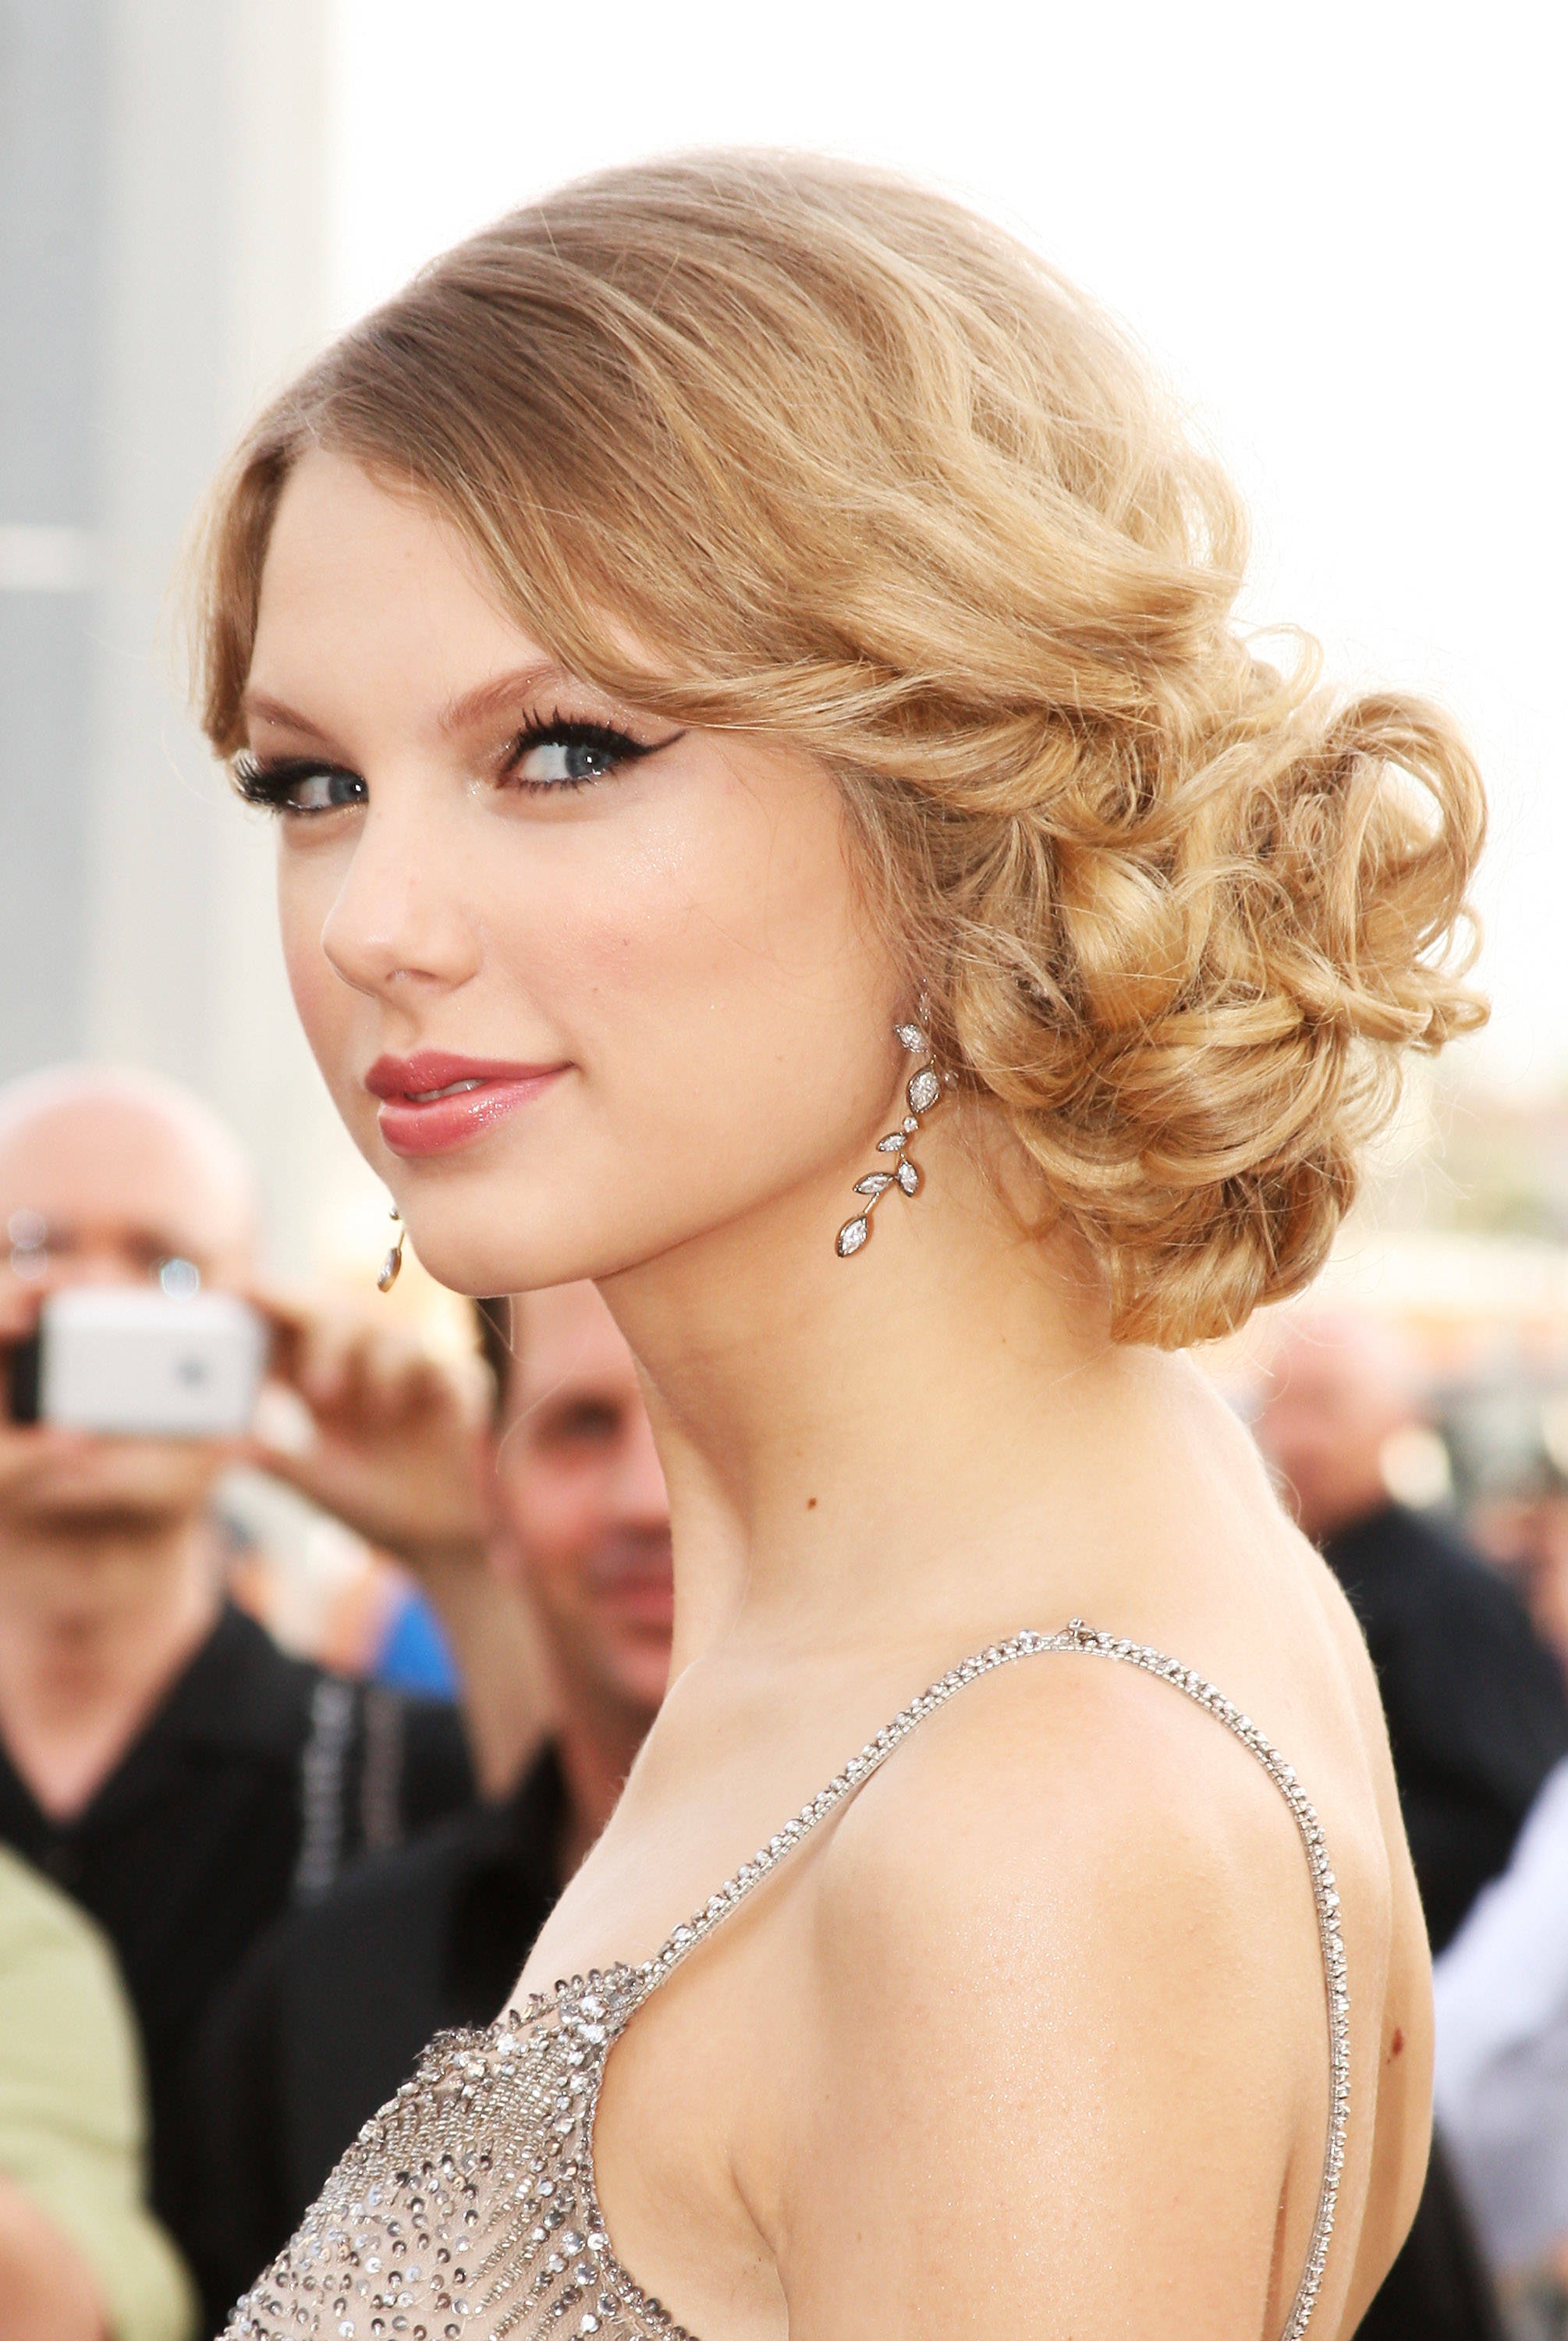 NASHVILLE, TN - JUNE 16: Singer/musician Taylor Swift attends the 2009 CMT Music Awards at the Sommet Center on June 16, 2009 in Nashville, Tennessee. (Photo by Jason Merritt/Getty Images)